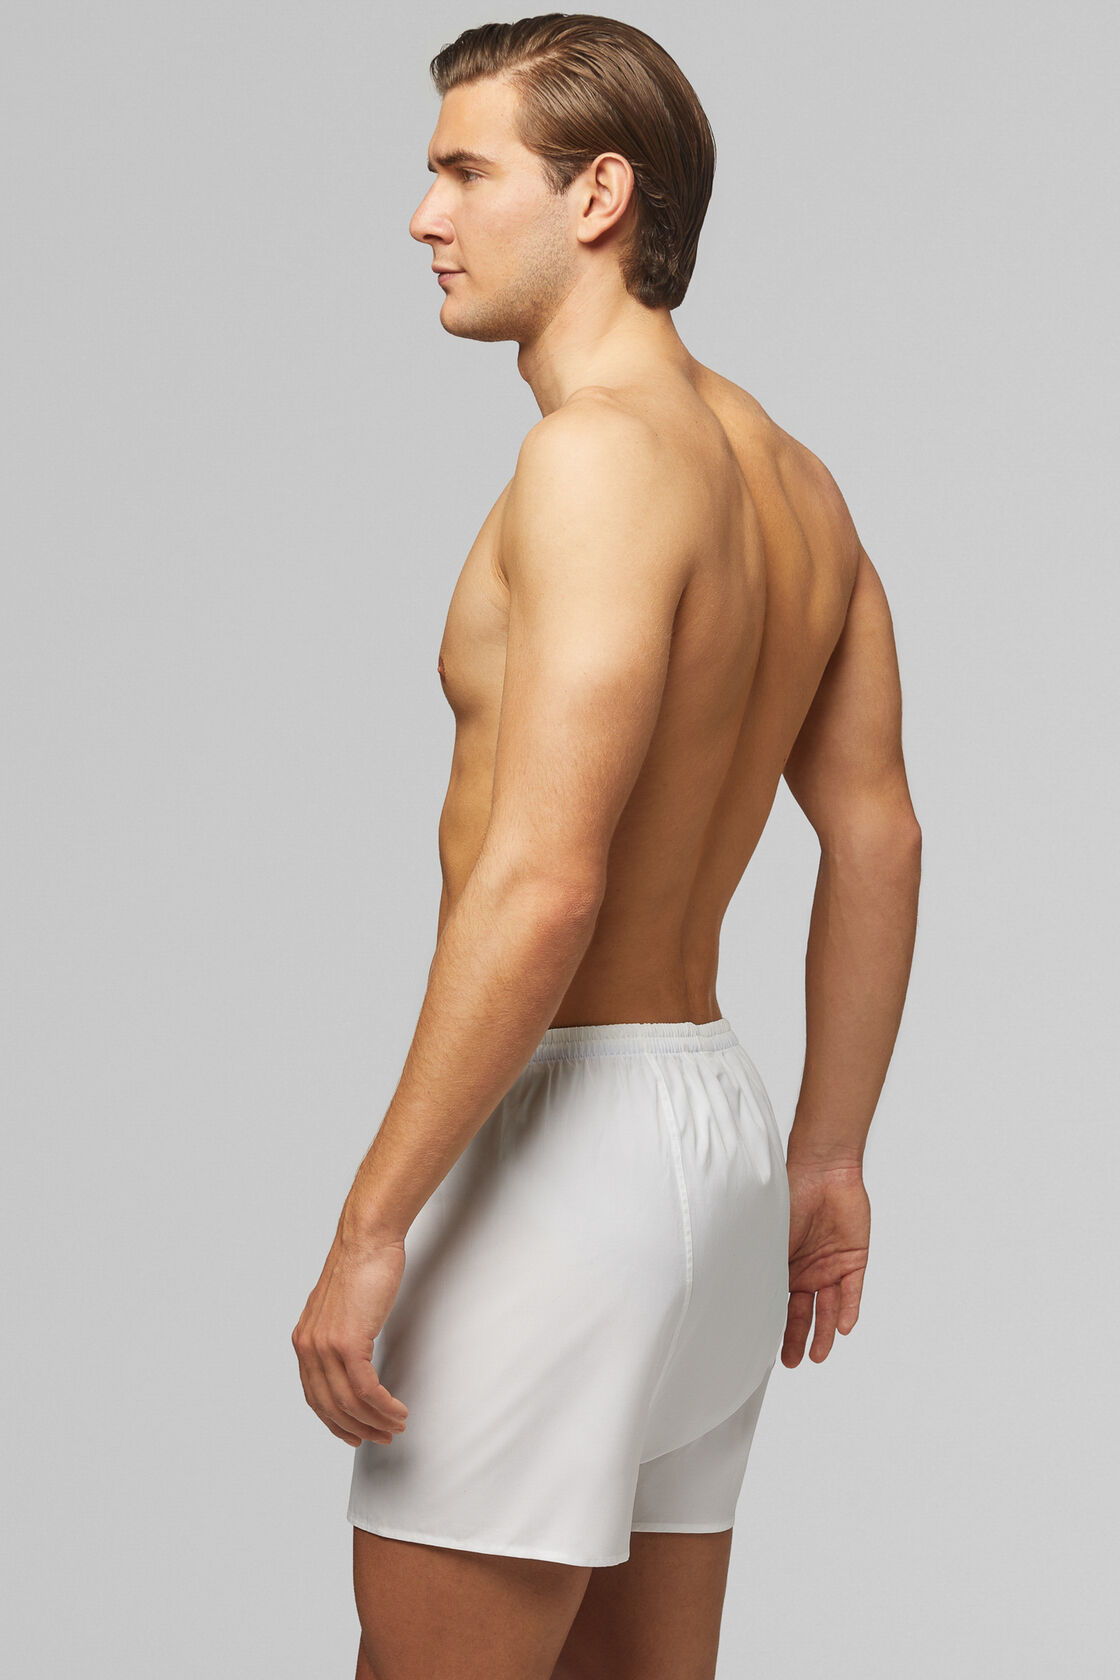 Cotton boxer shorts, Plain white, hi-res